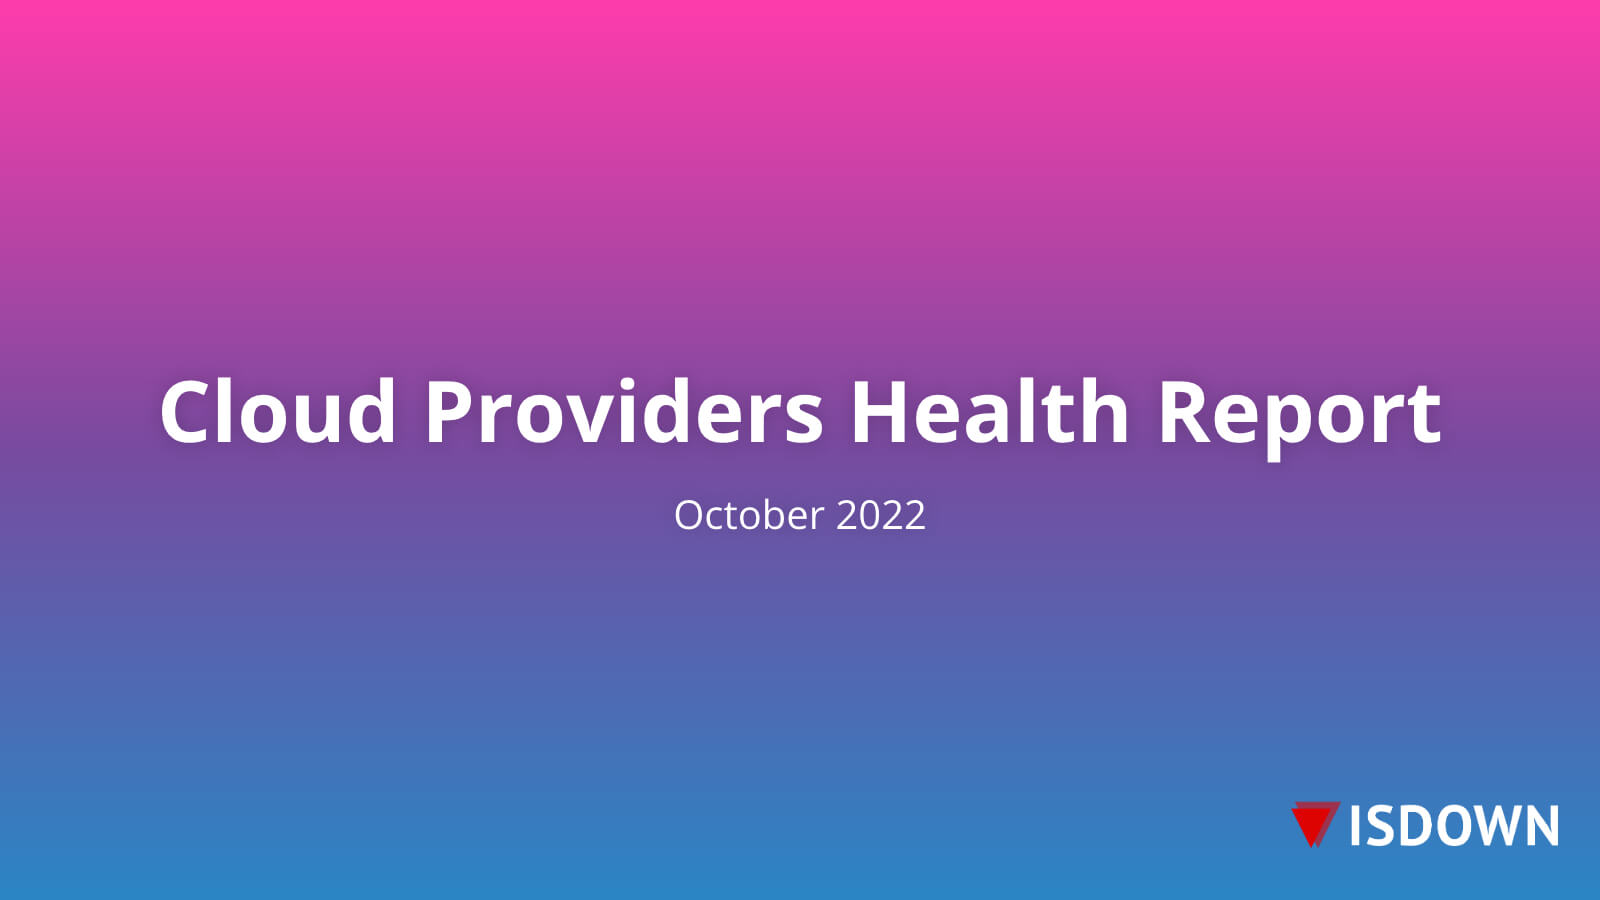 Cloud Providers Health Report - October 2022